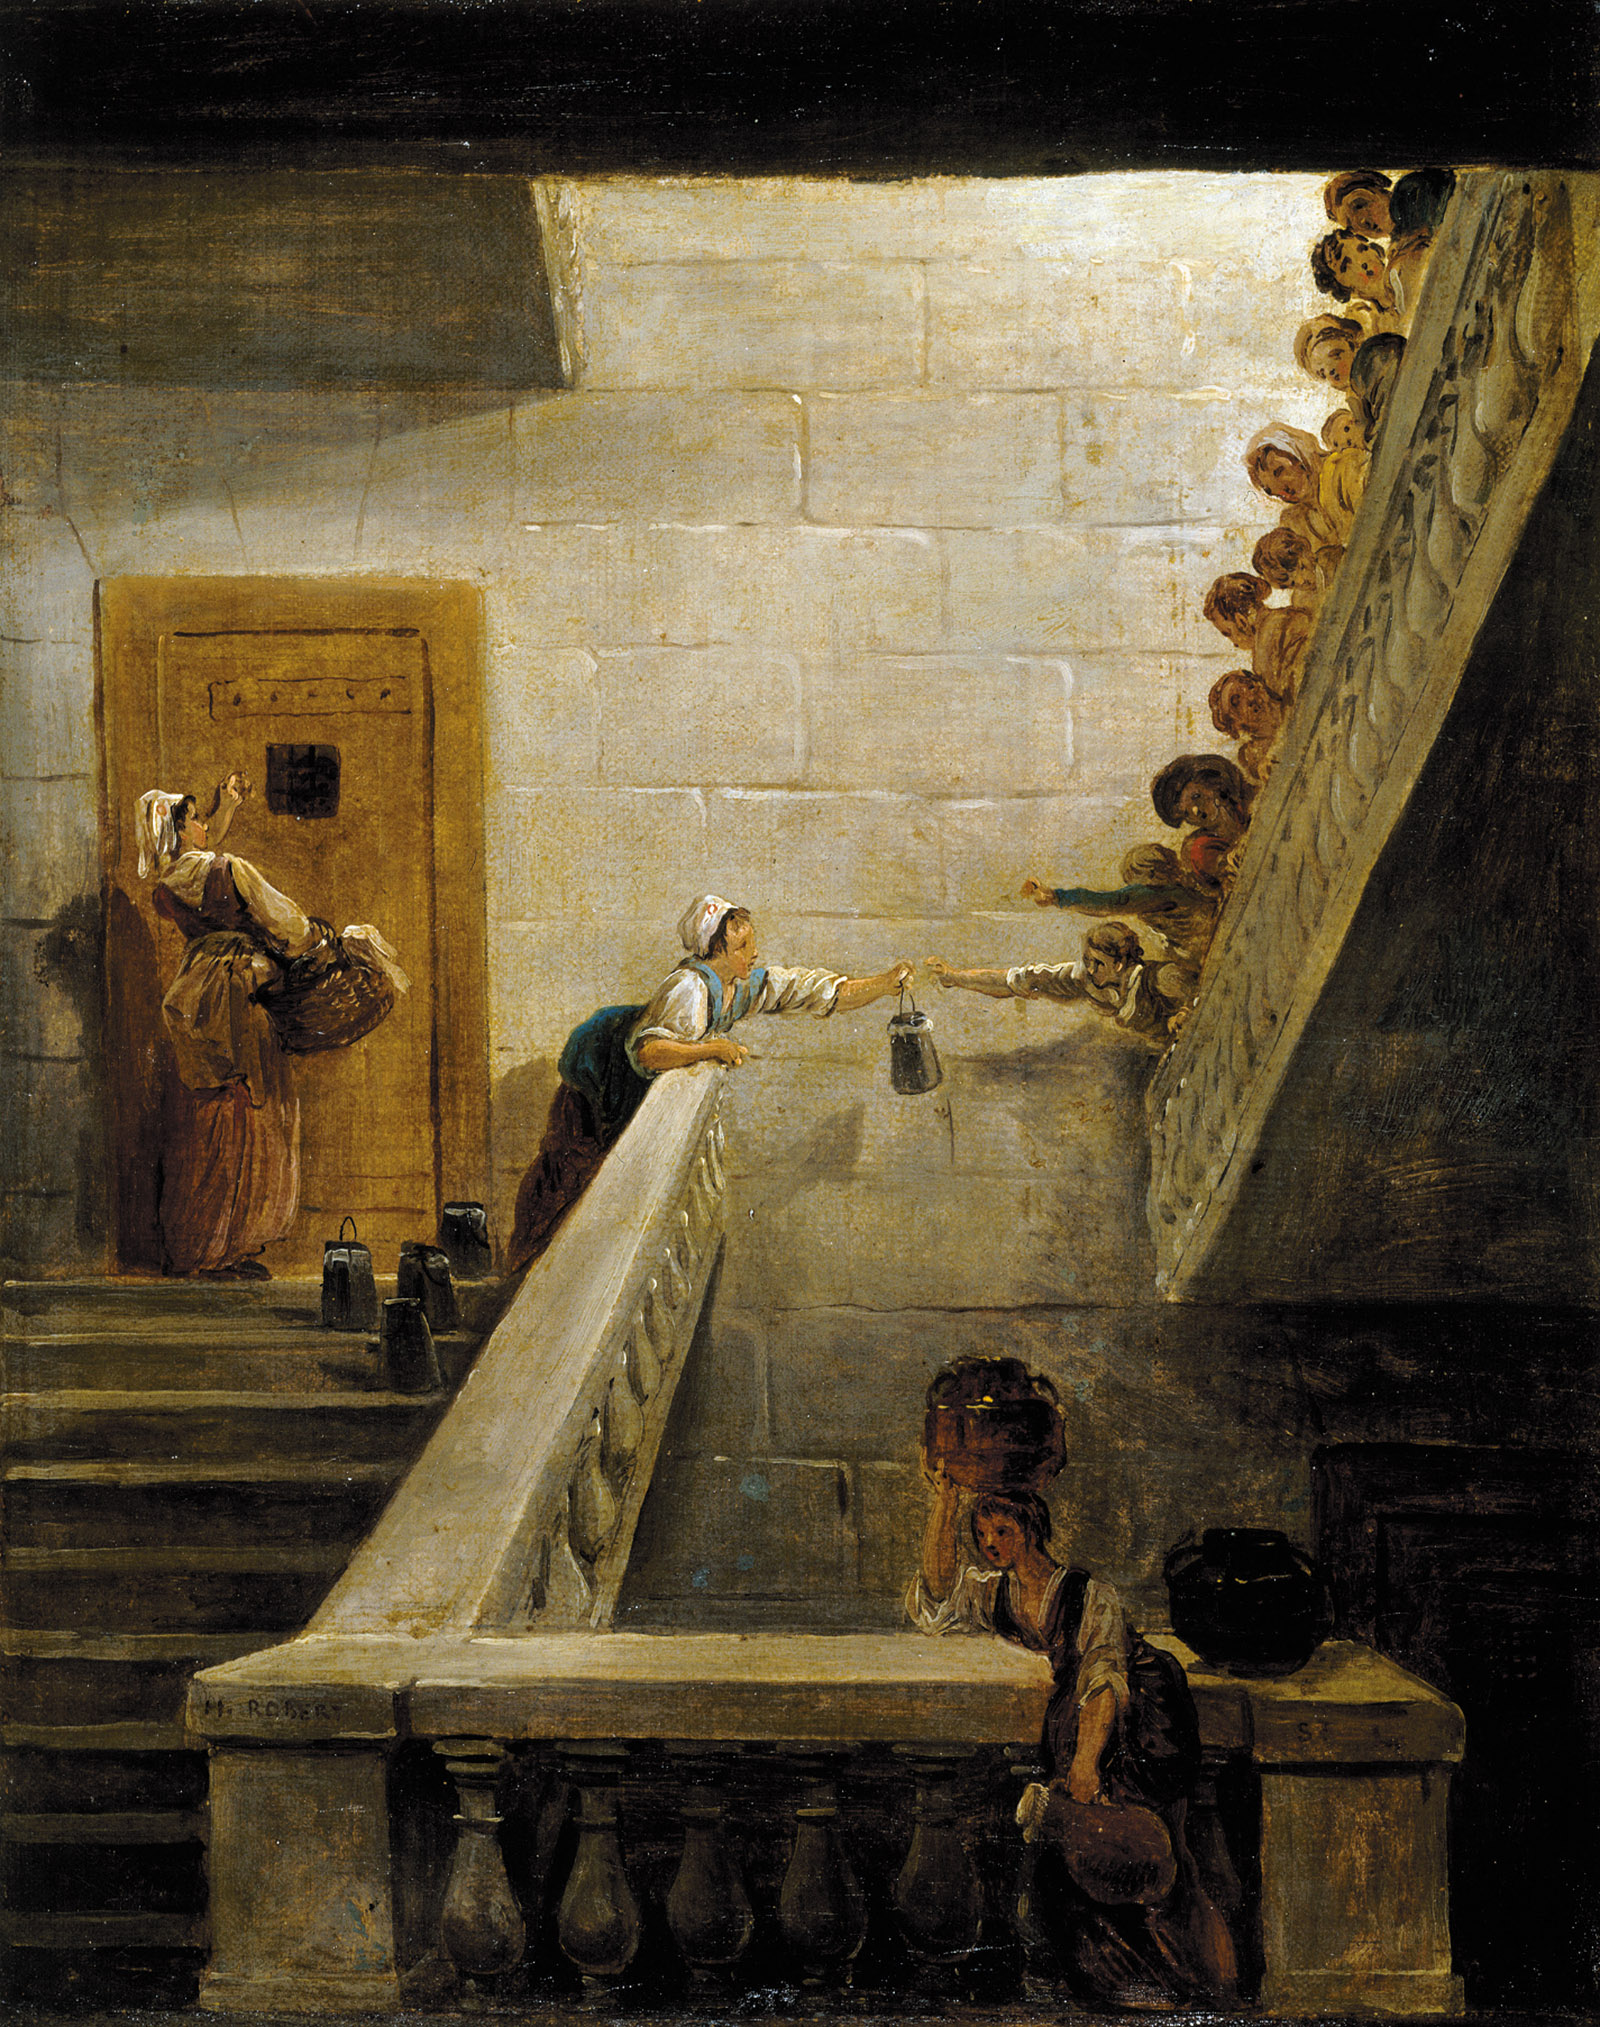 Hubert Robert: Feeding the Prisoners of Saint-Lazare, 15 15/16 x 12 13/16 inches, 1794